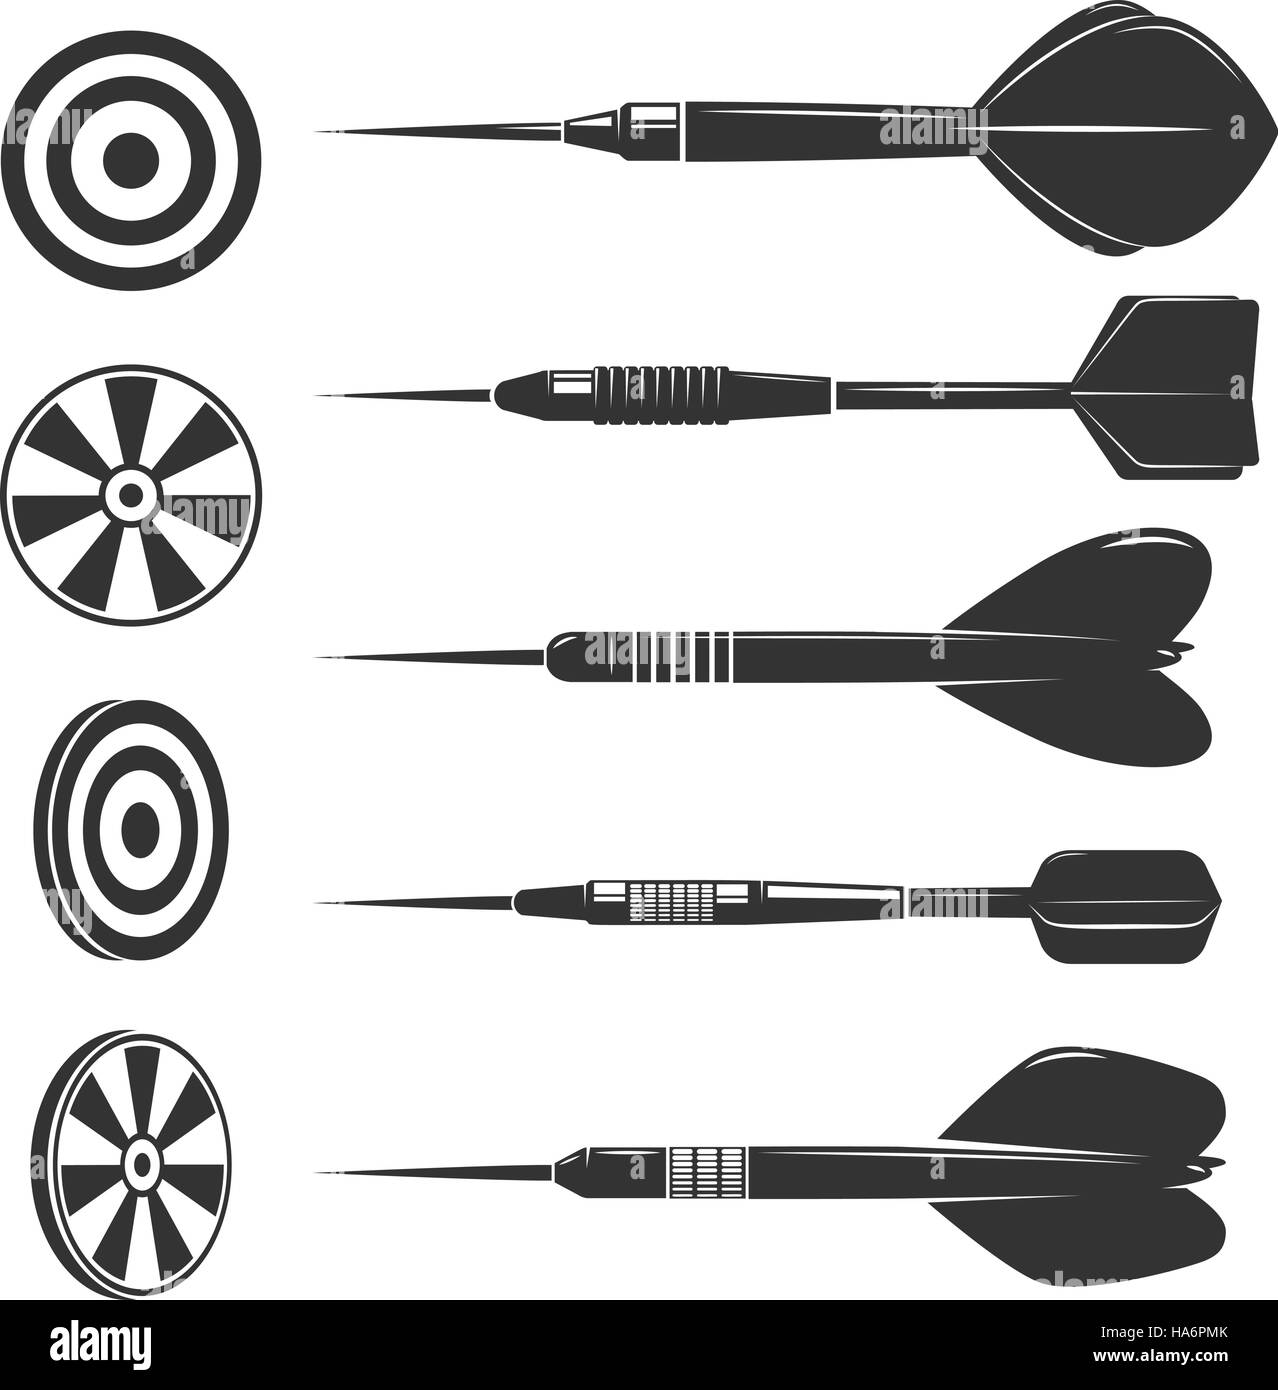 Set of darts for darts game isolated on white background. Design elements for logo, label, emblem, sign, brand mark. Vector illustration. Stock Vector